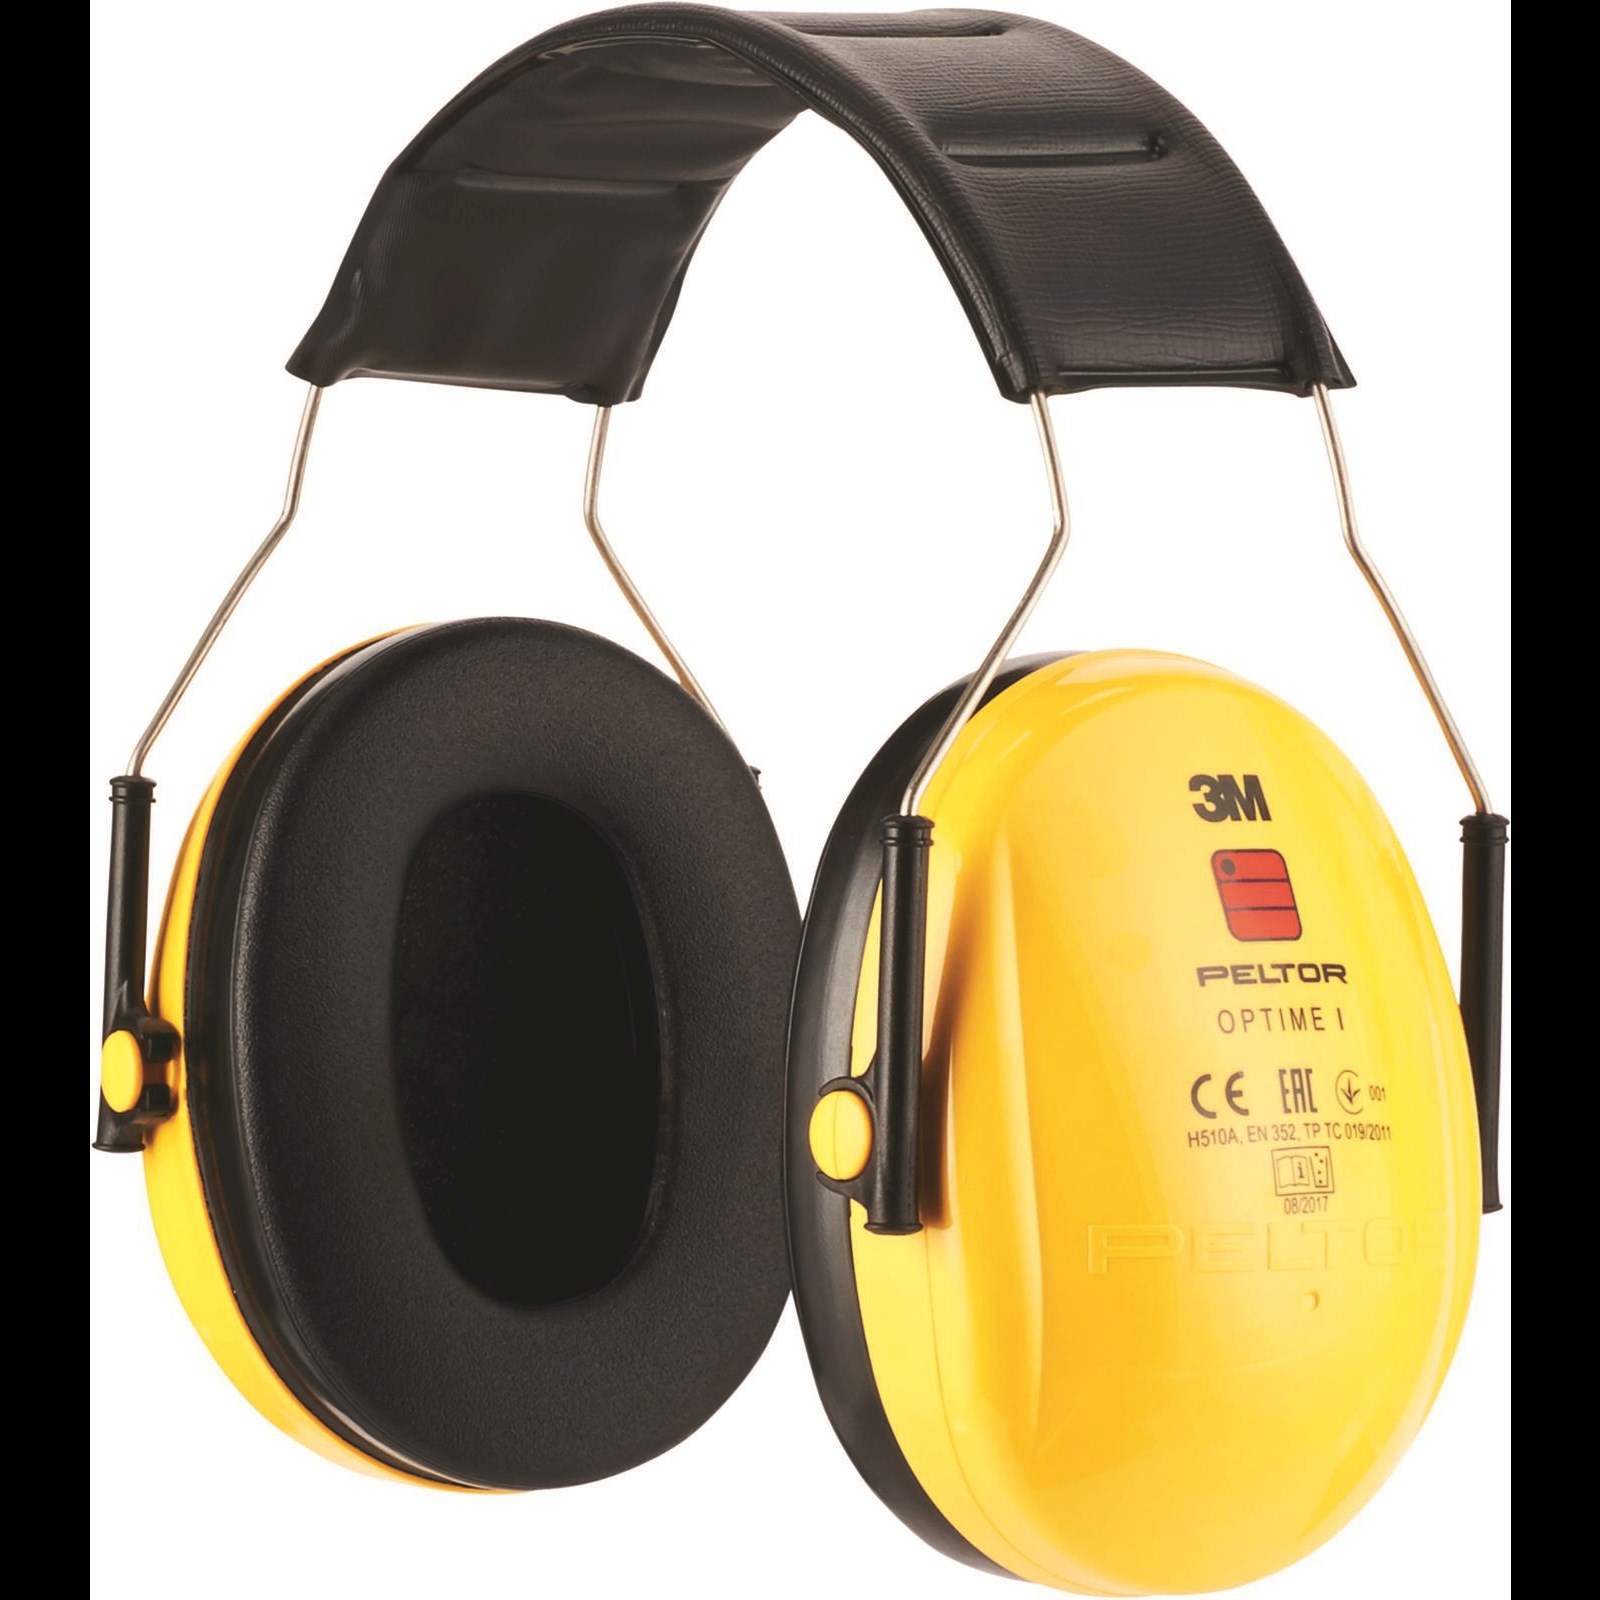 Gehörschutz Peltor Optime kaufen - Arbeitsschutz - LANDI